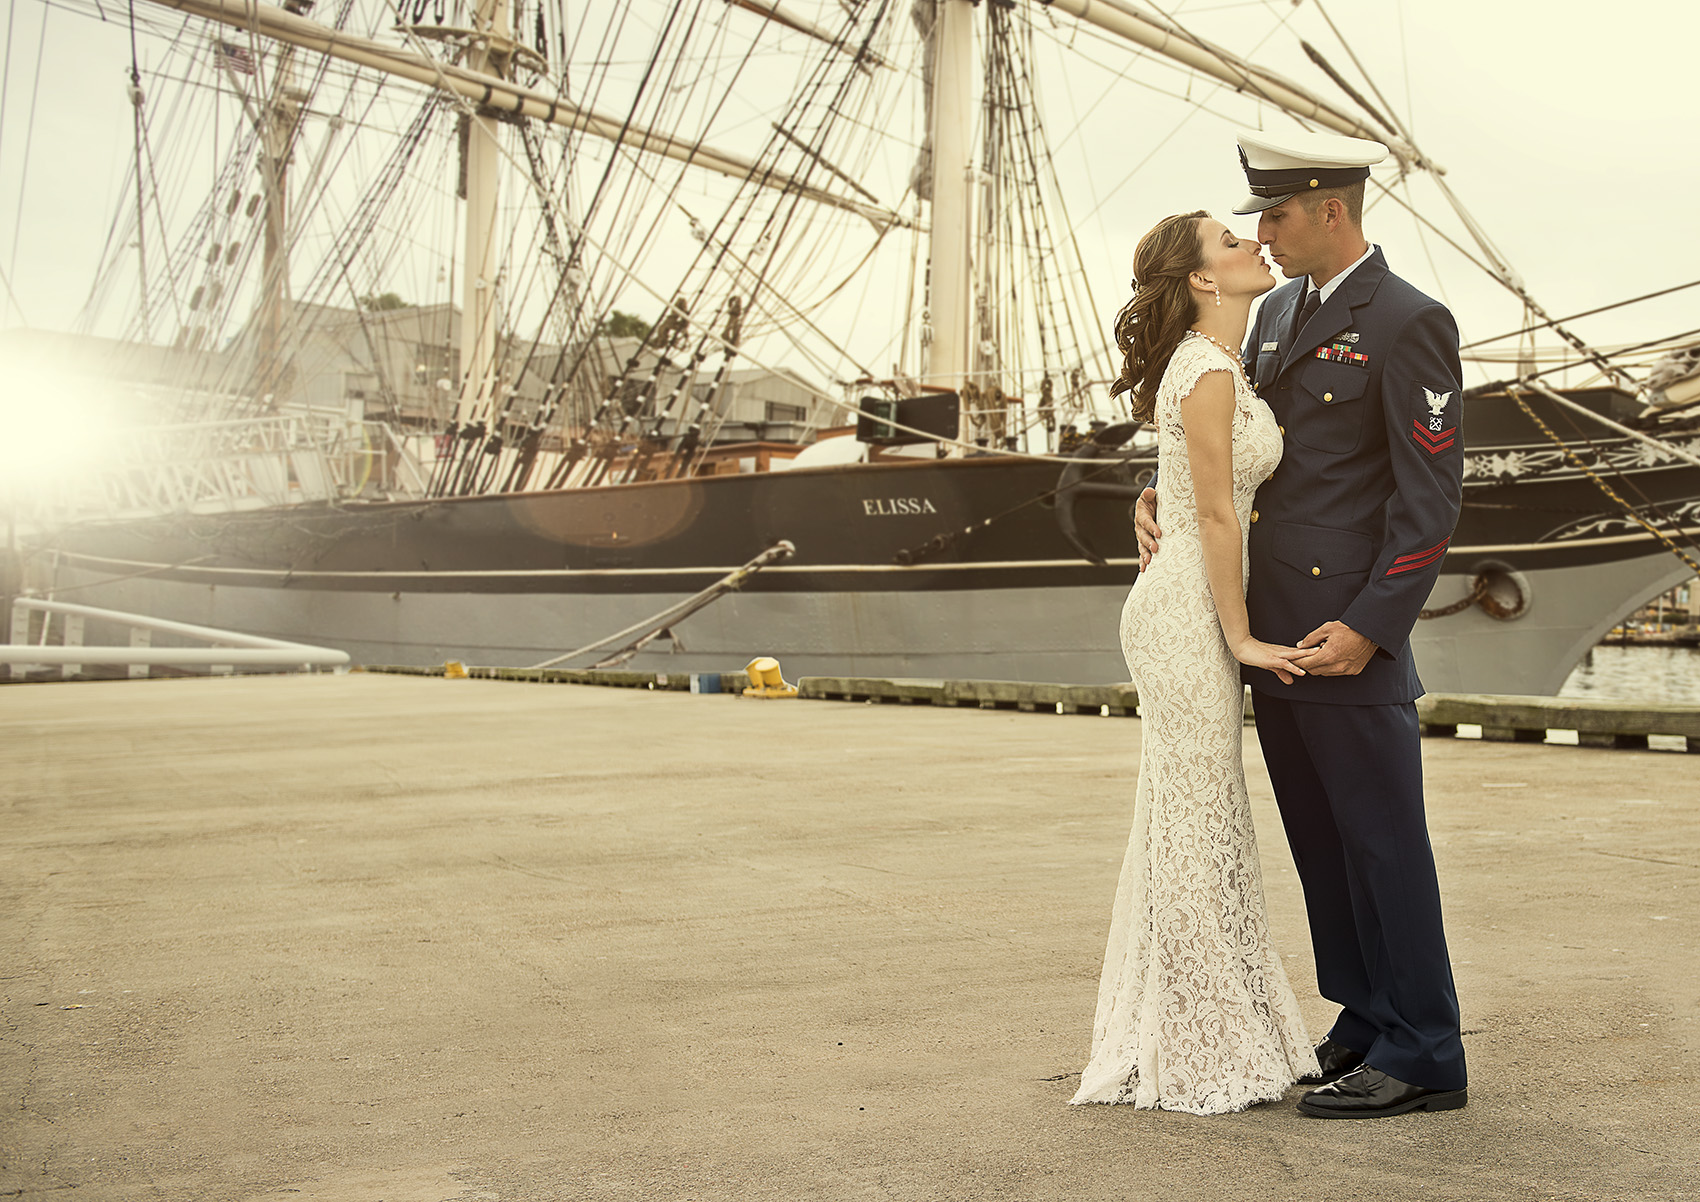 Galveston Modern Romantic Classy High Fashion Military Coastguard Wedding photography 